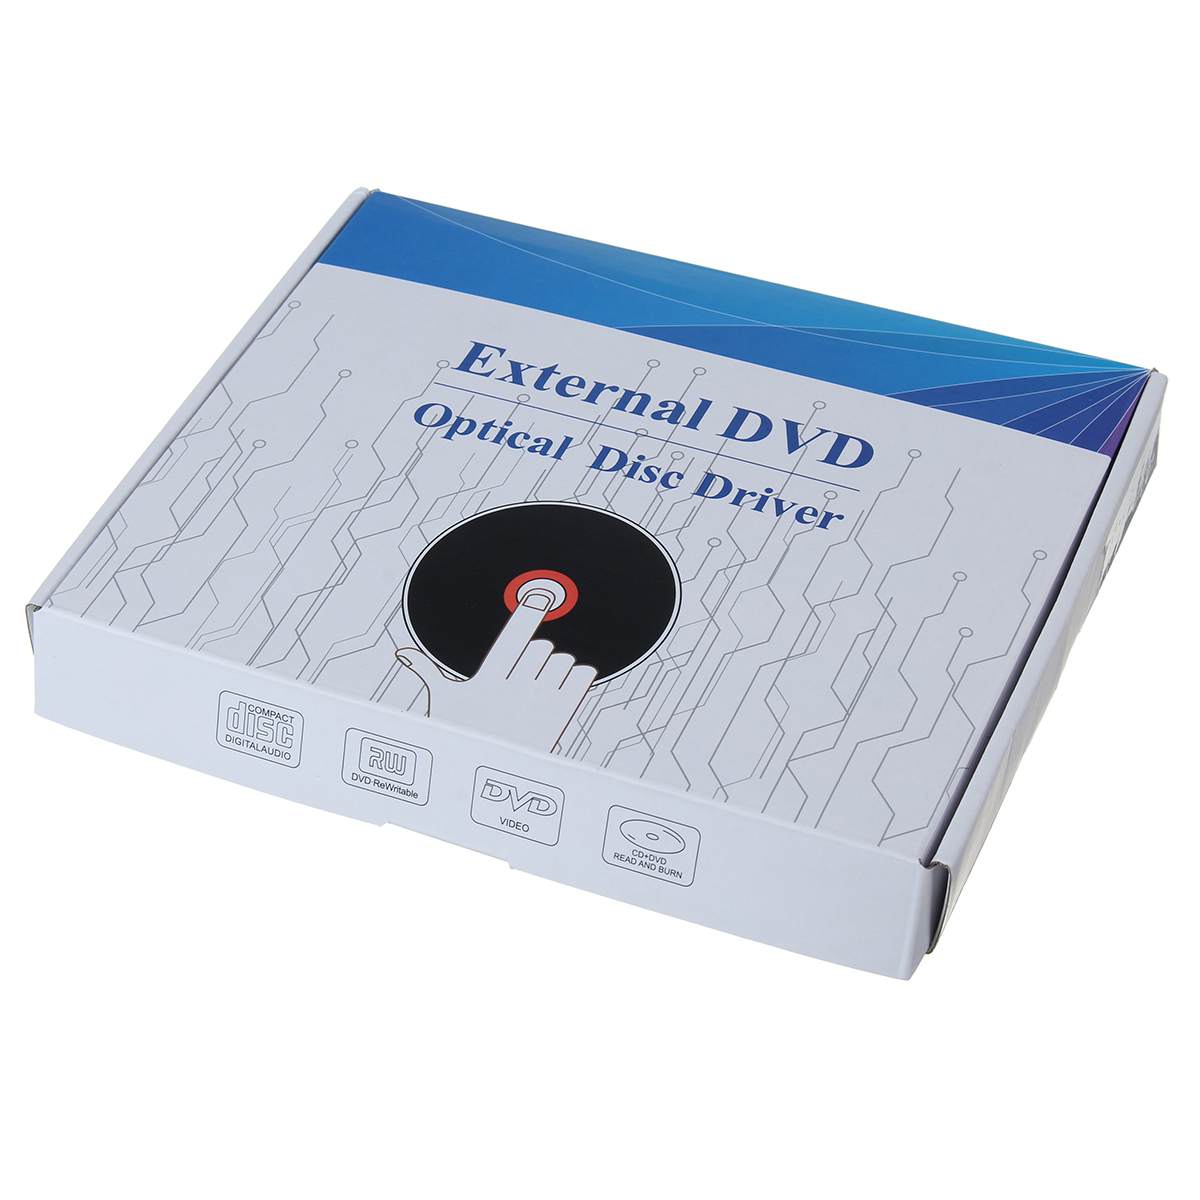 Type-C-USB-30-External-DVD-Burner-Writer-Recorder-Player-DVD-RW-Optical-Drive-CDDVD-ROM-Player-for-L-1710613